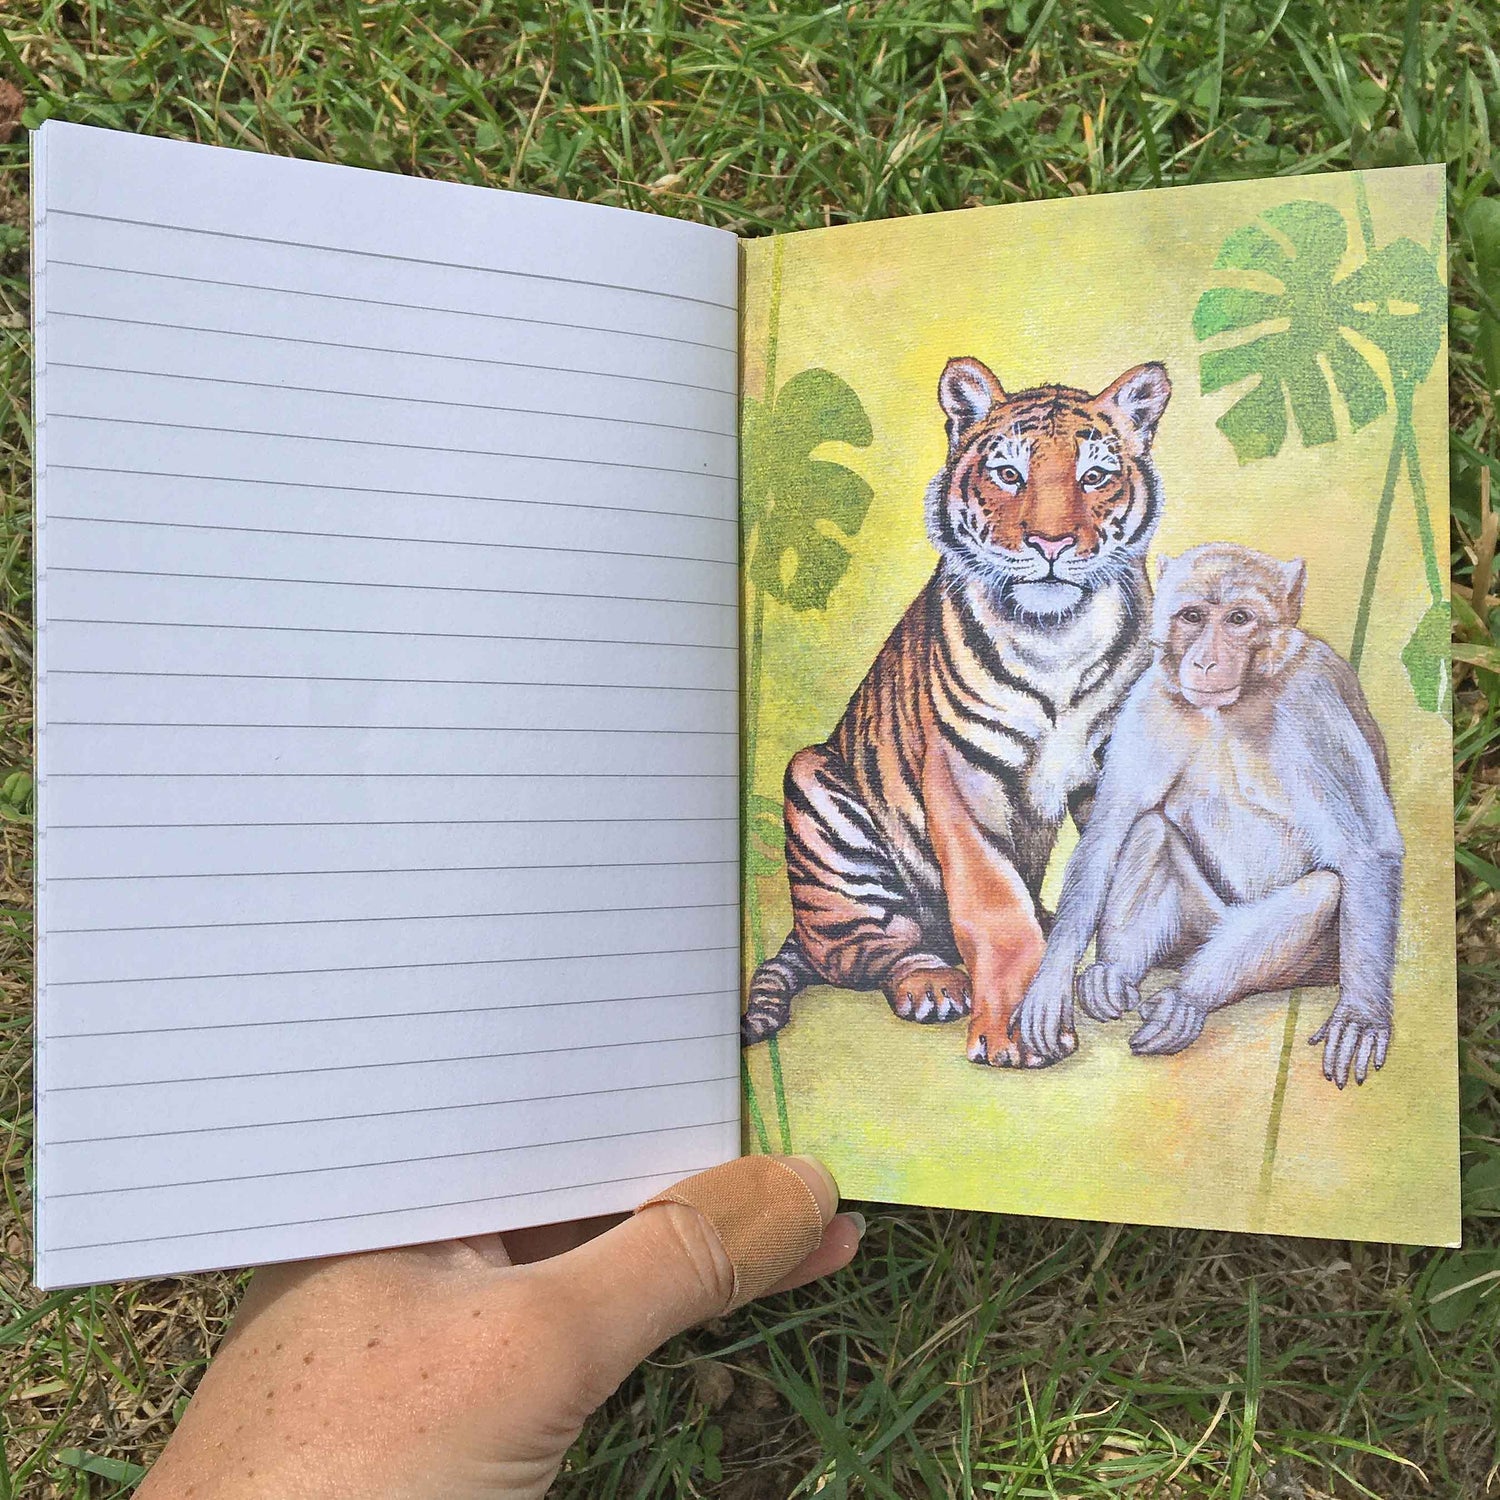 Monkey & Tiger Journal | A6, Plain or Lined journal Lined JPArtwork Jenny Pond